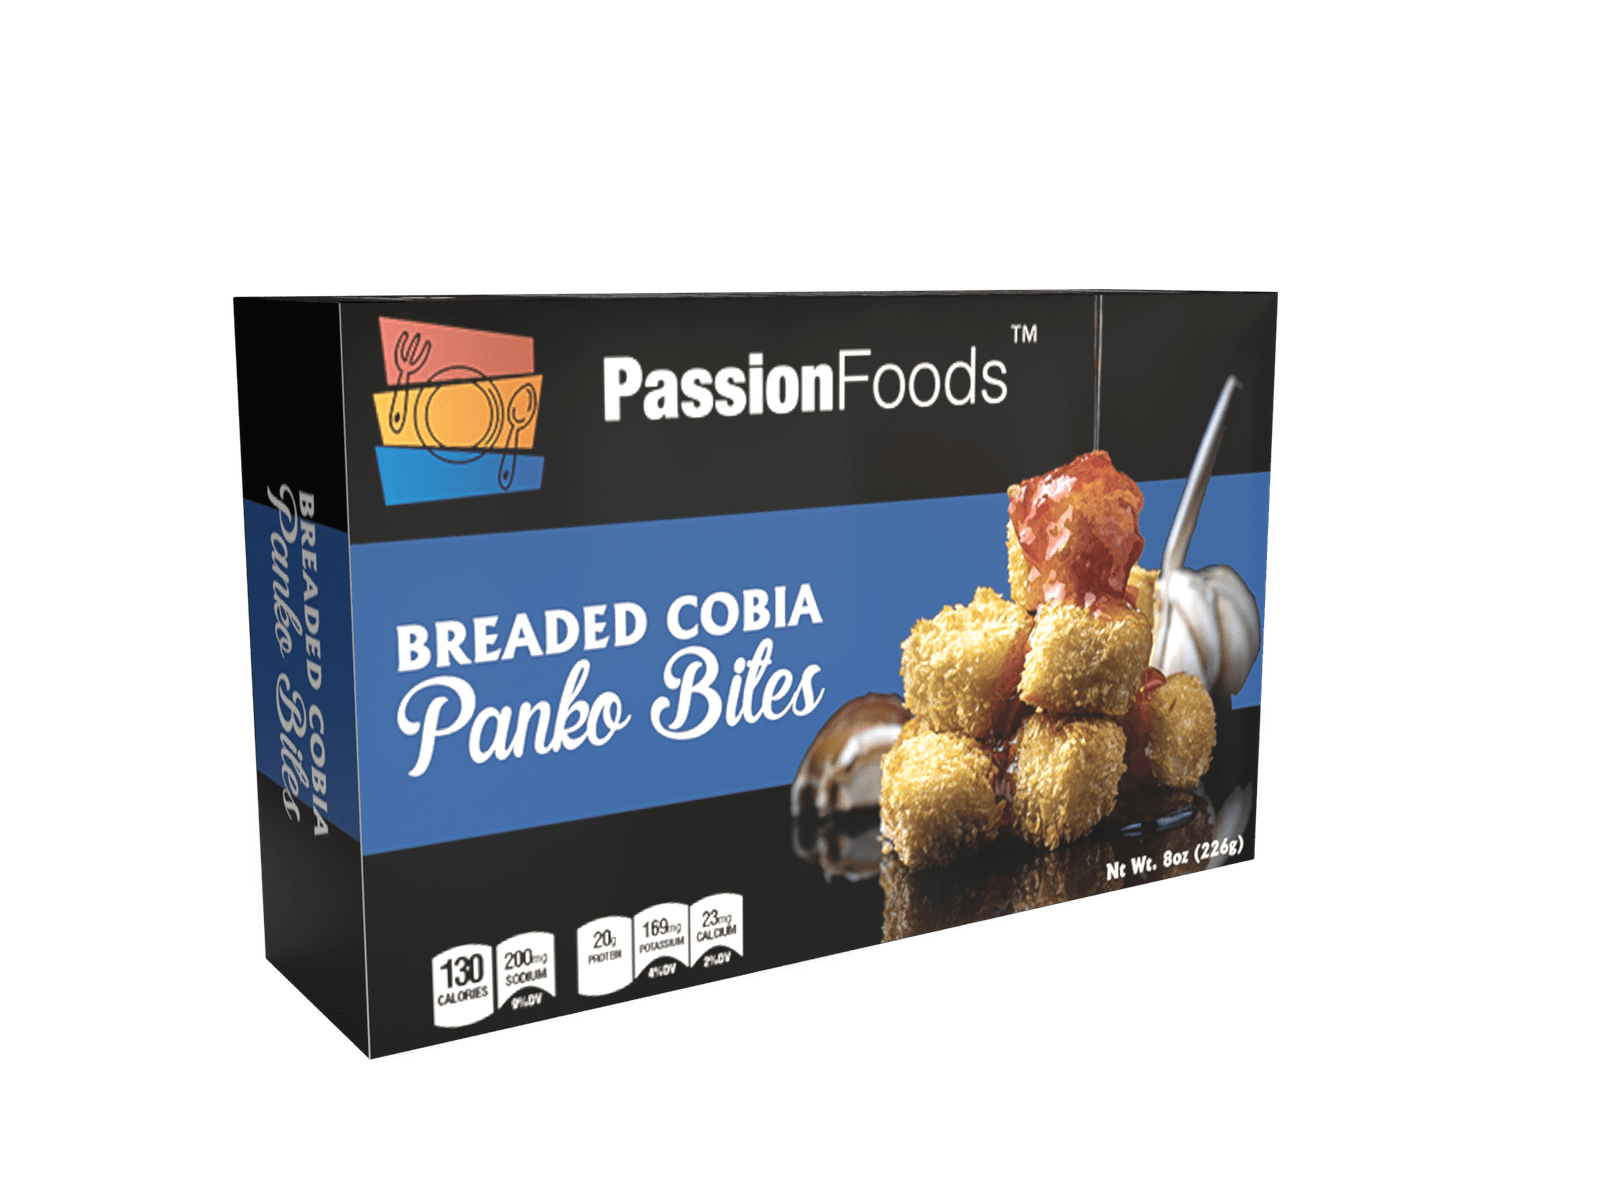 Breaded Cobia Panko Bites